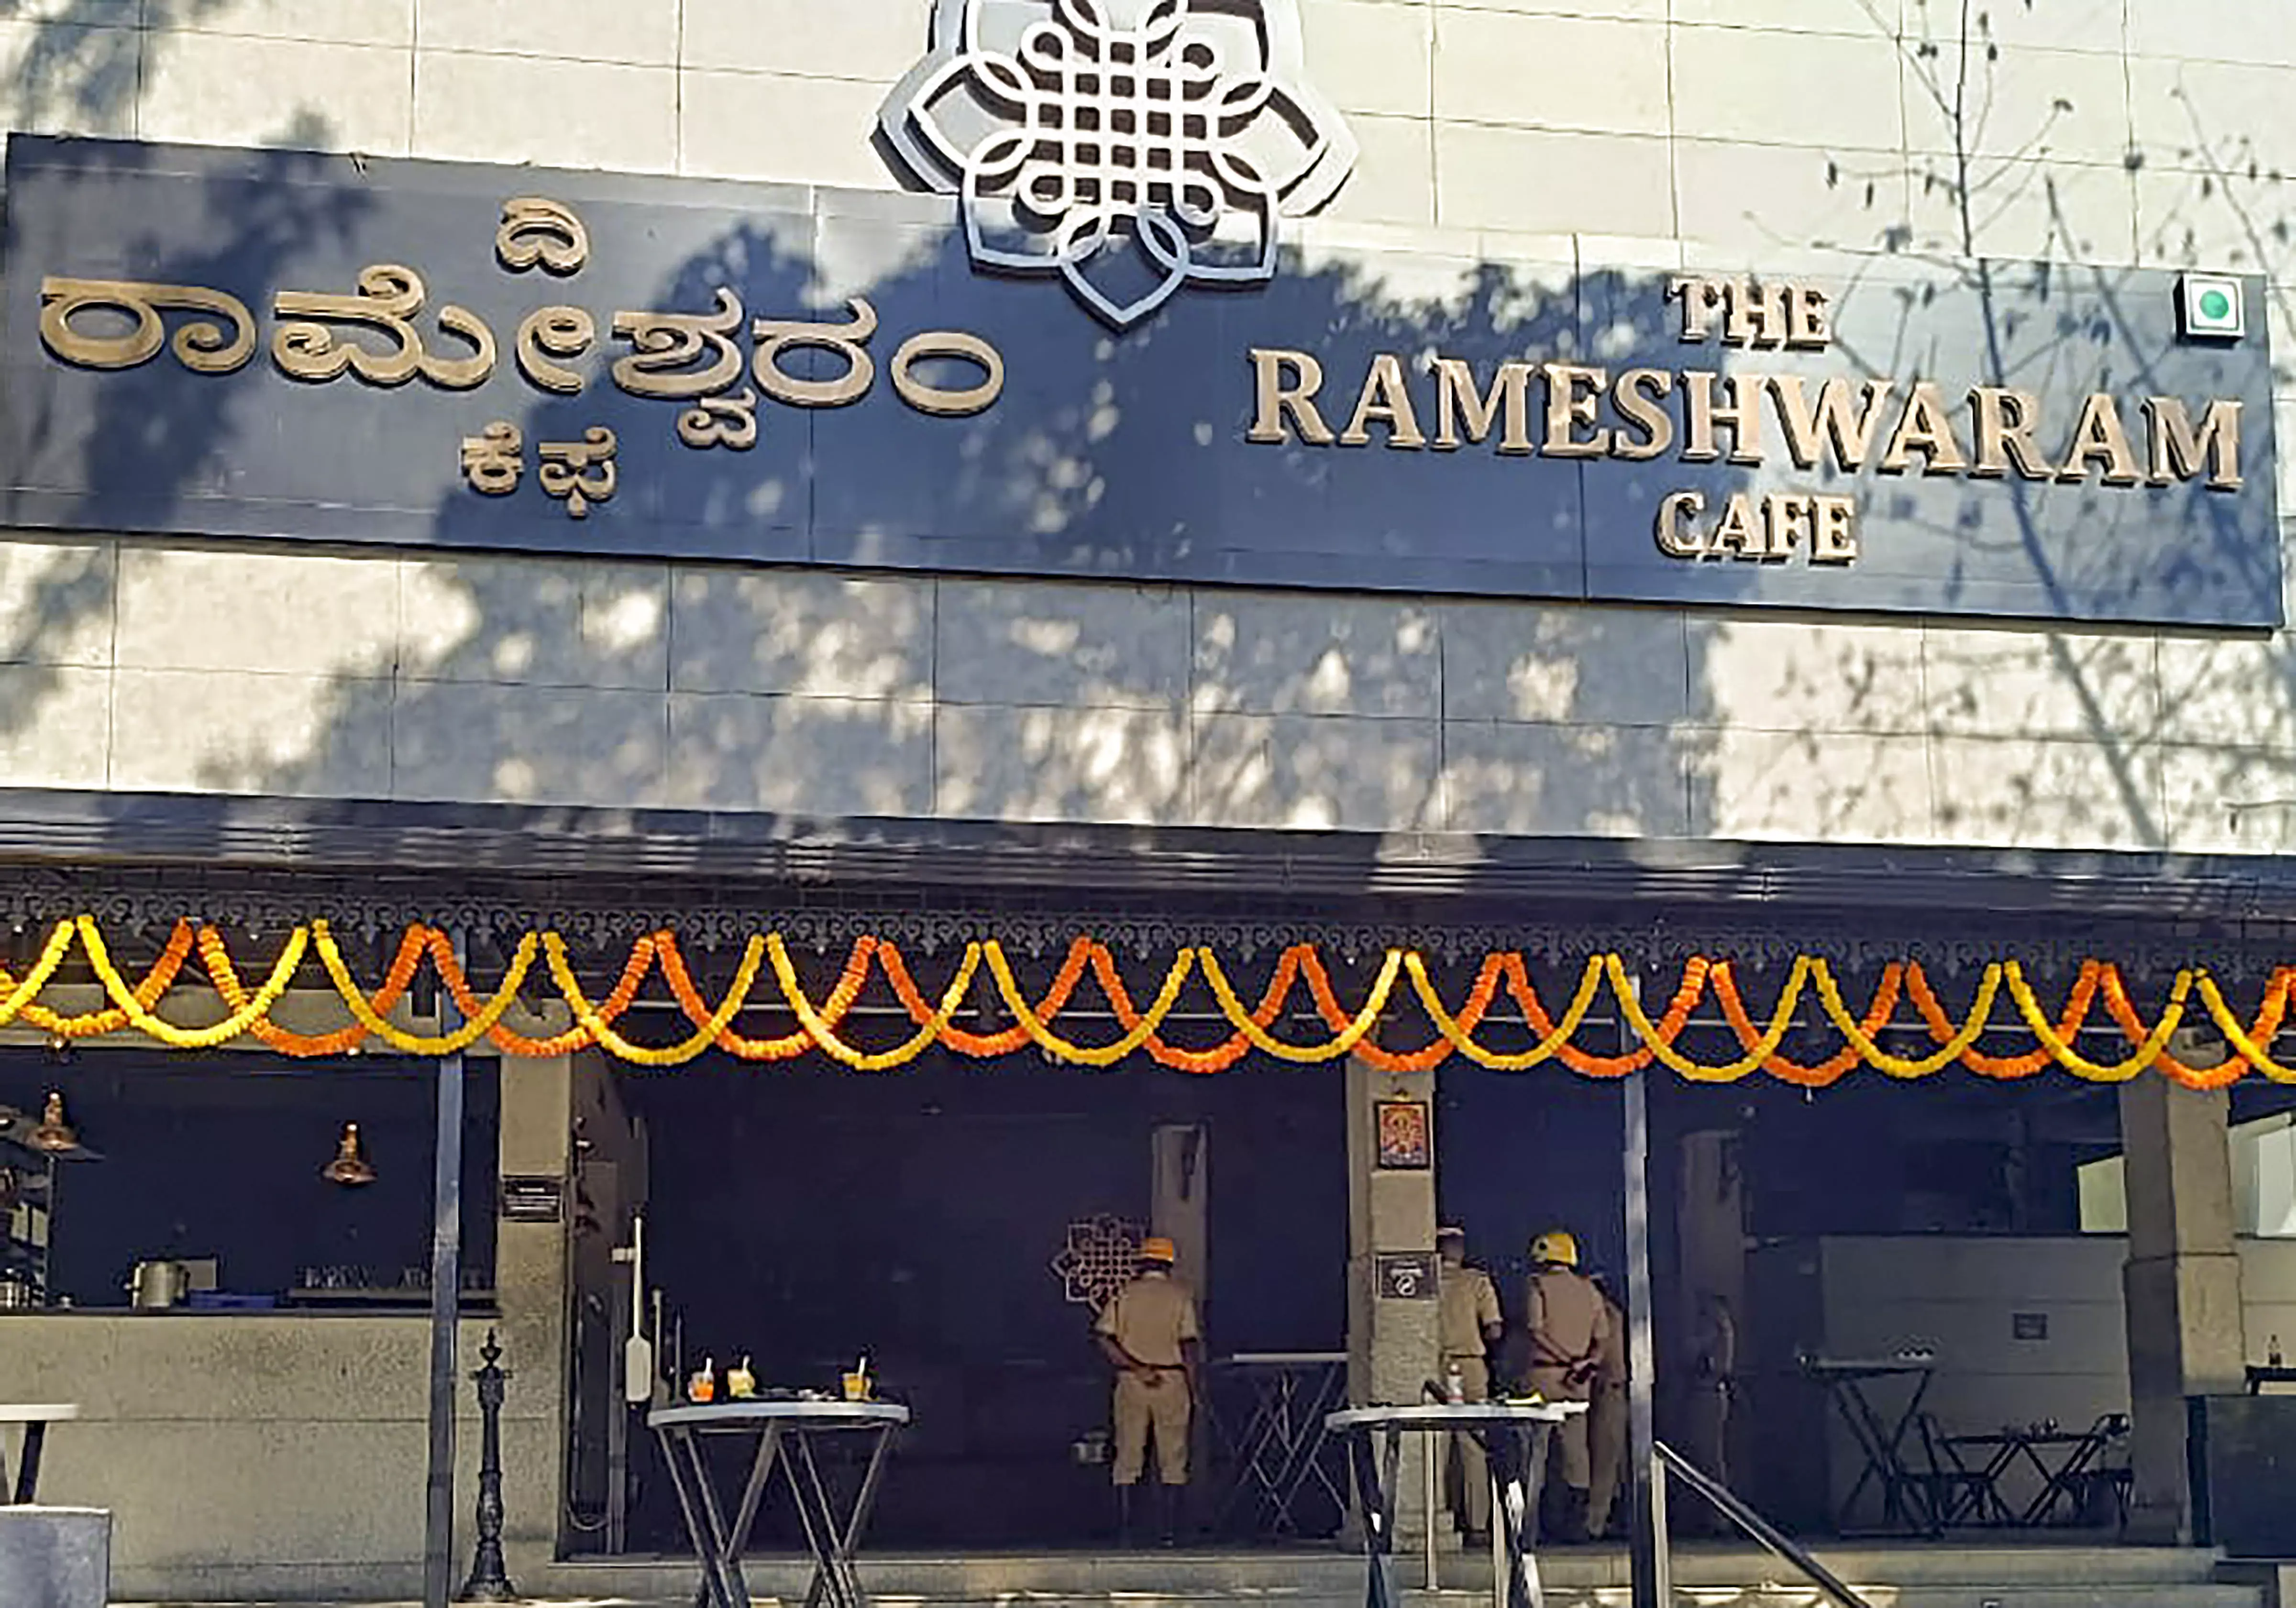 Rameshwaram Café blast: NIA raids more terror hideouts in Karnataka